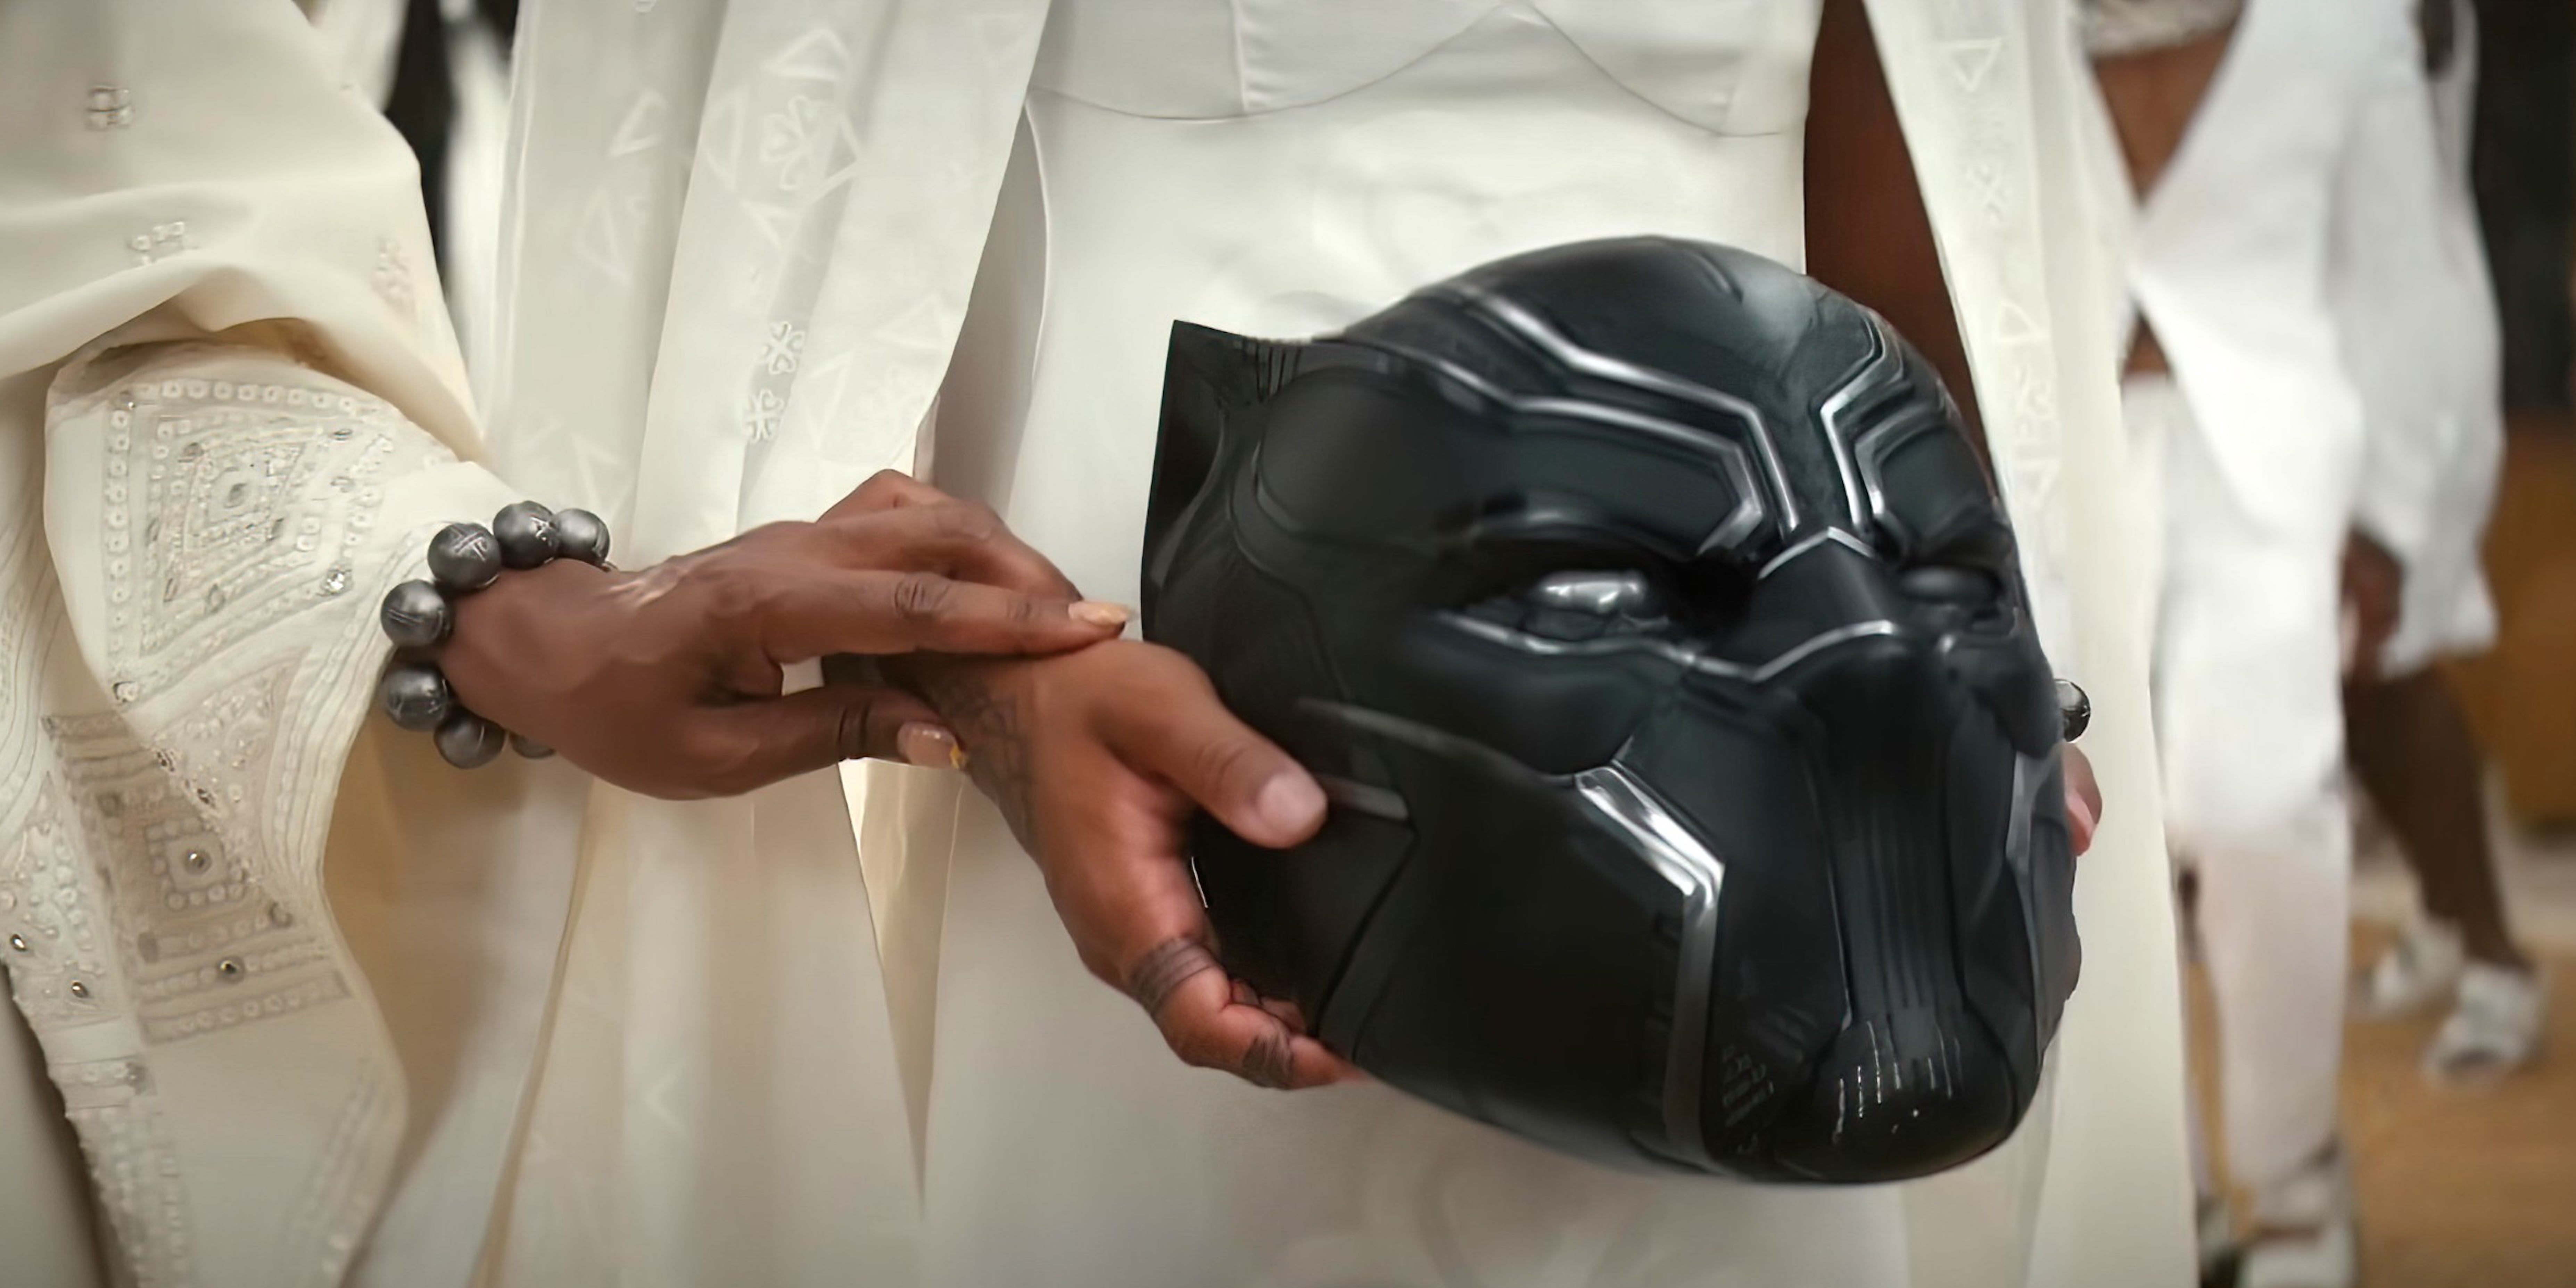 Watch: New Female Black Panther Battles Enemies In Wakanda Forever Trailer